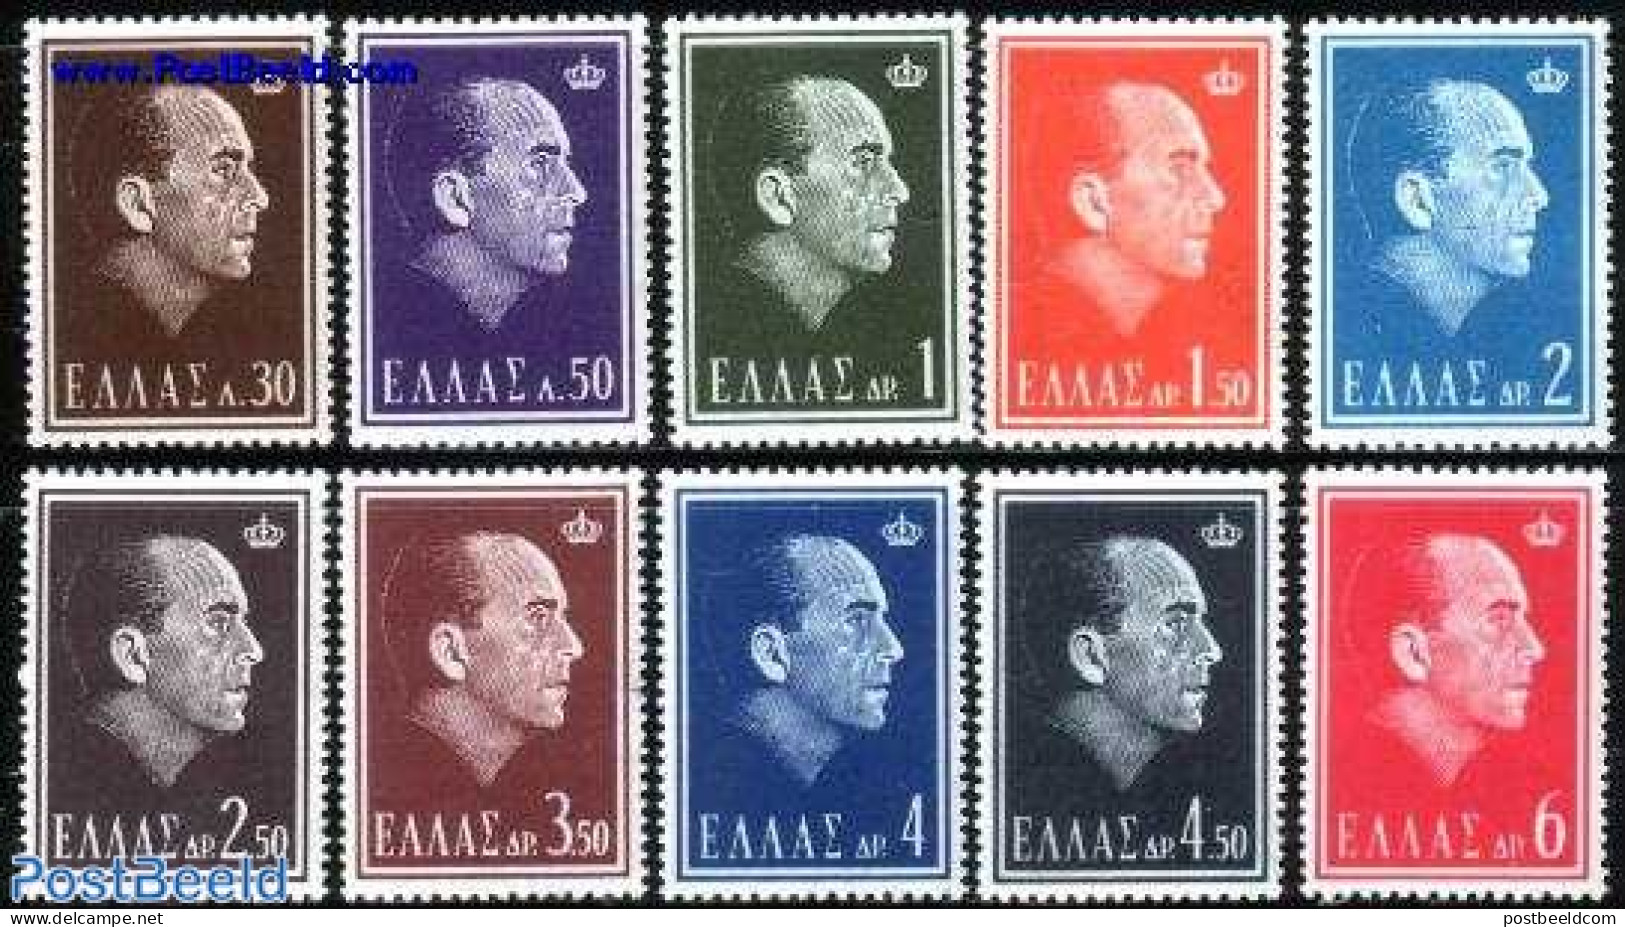 Greece 1964 Definitives, King Paul I 10v, Mint NH - Nuevos